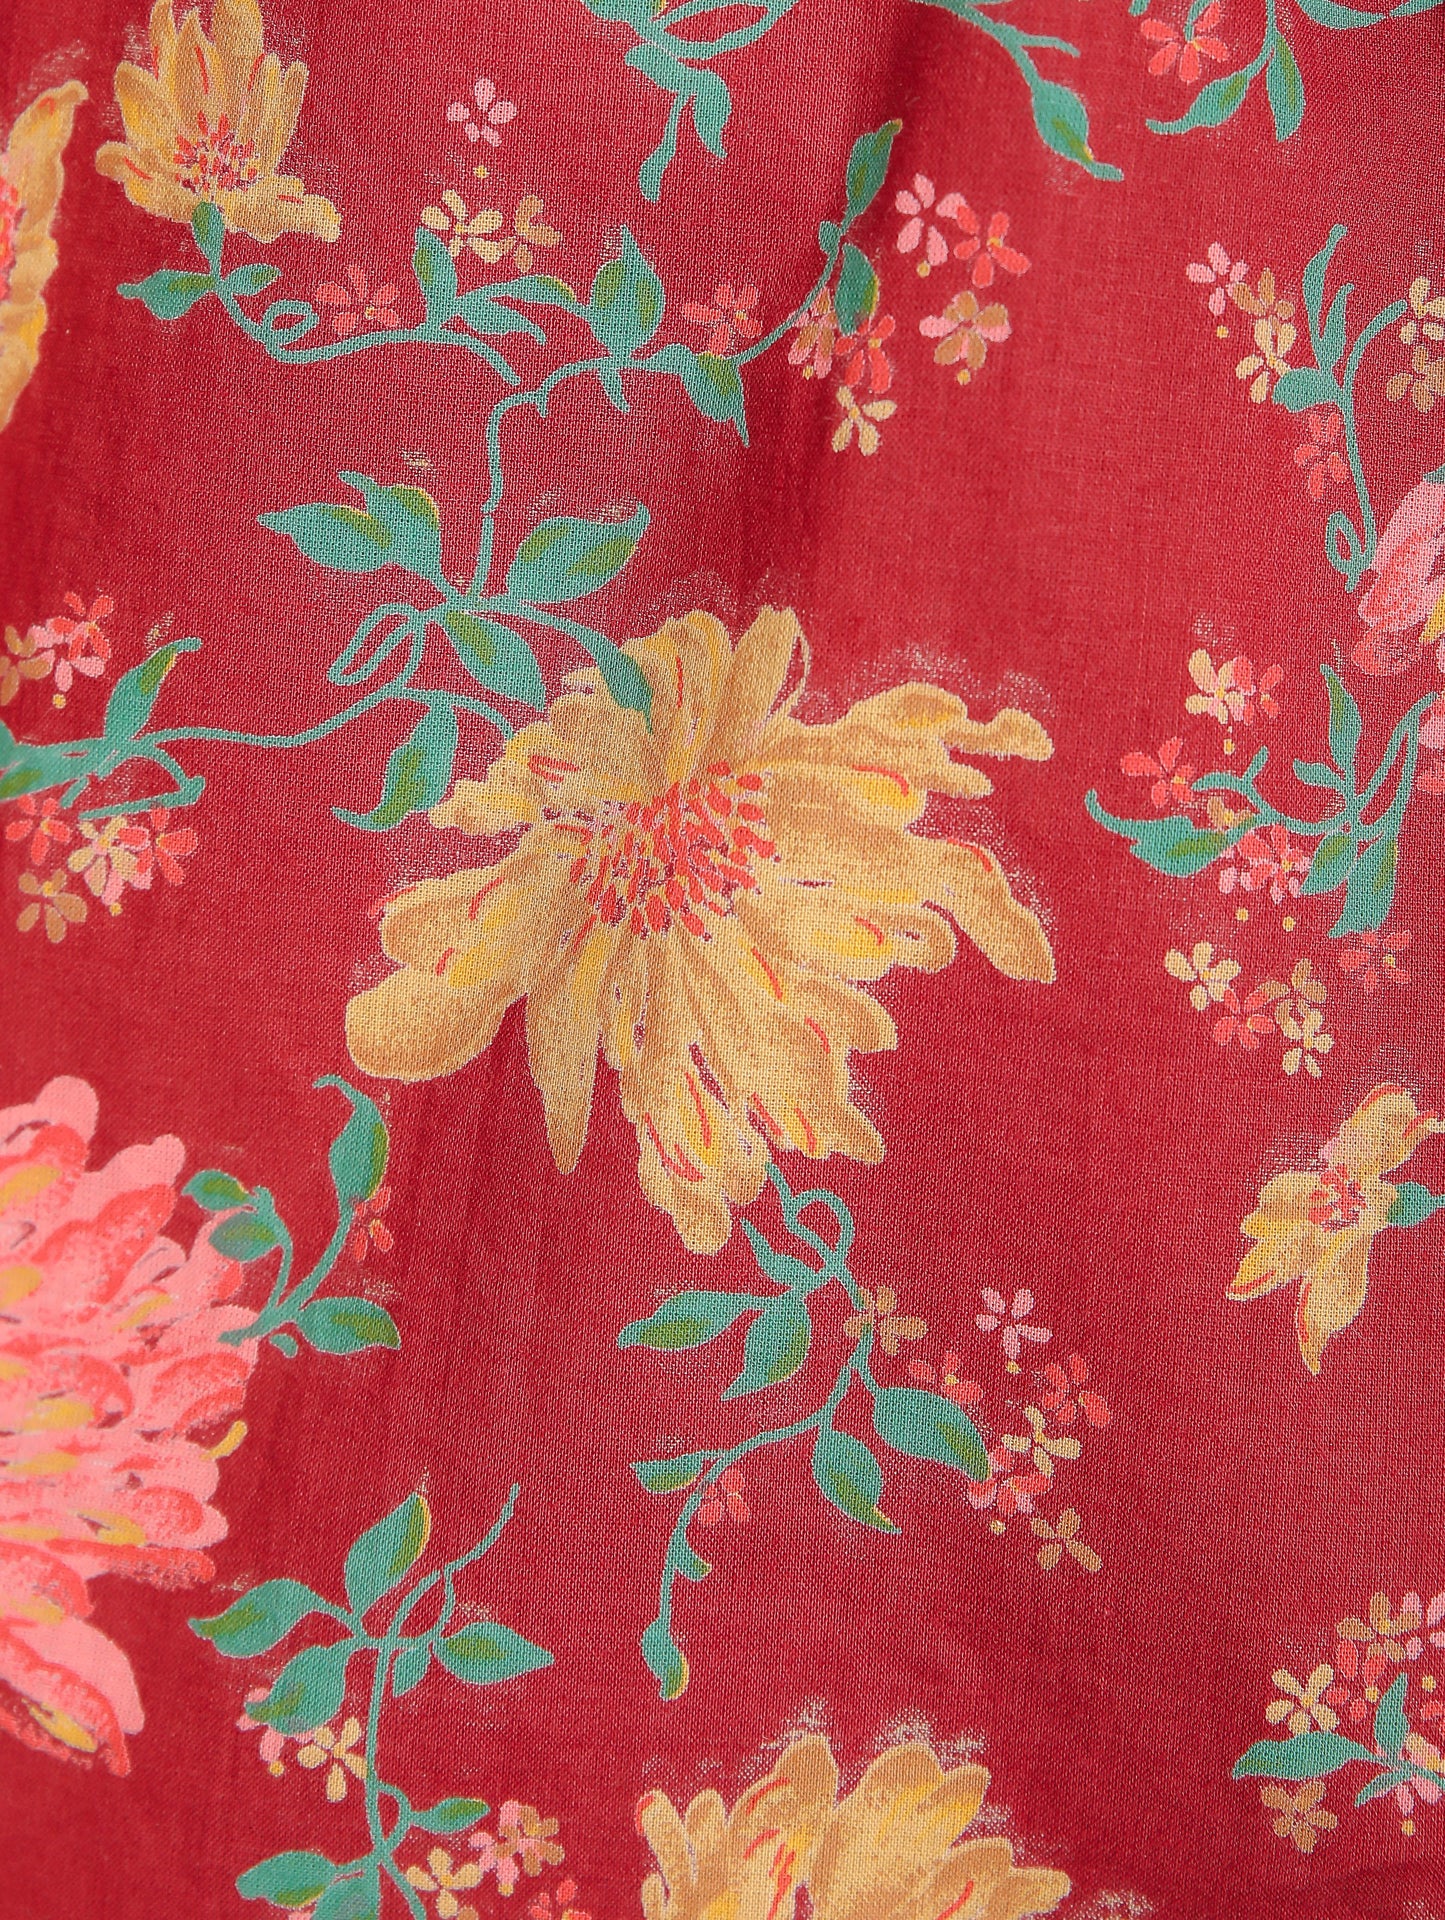 Floral Motifs on Maroon Cotton Kaftan Top Pant Set